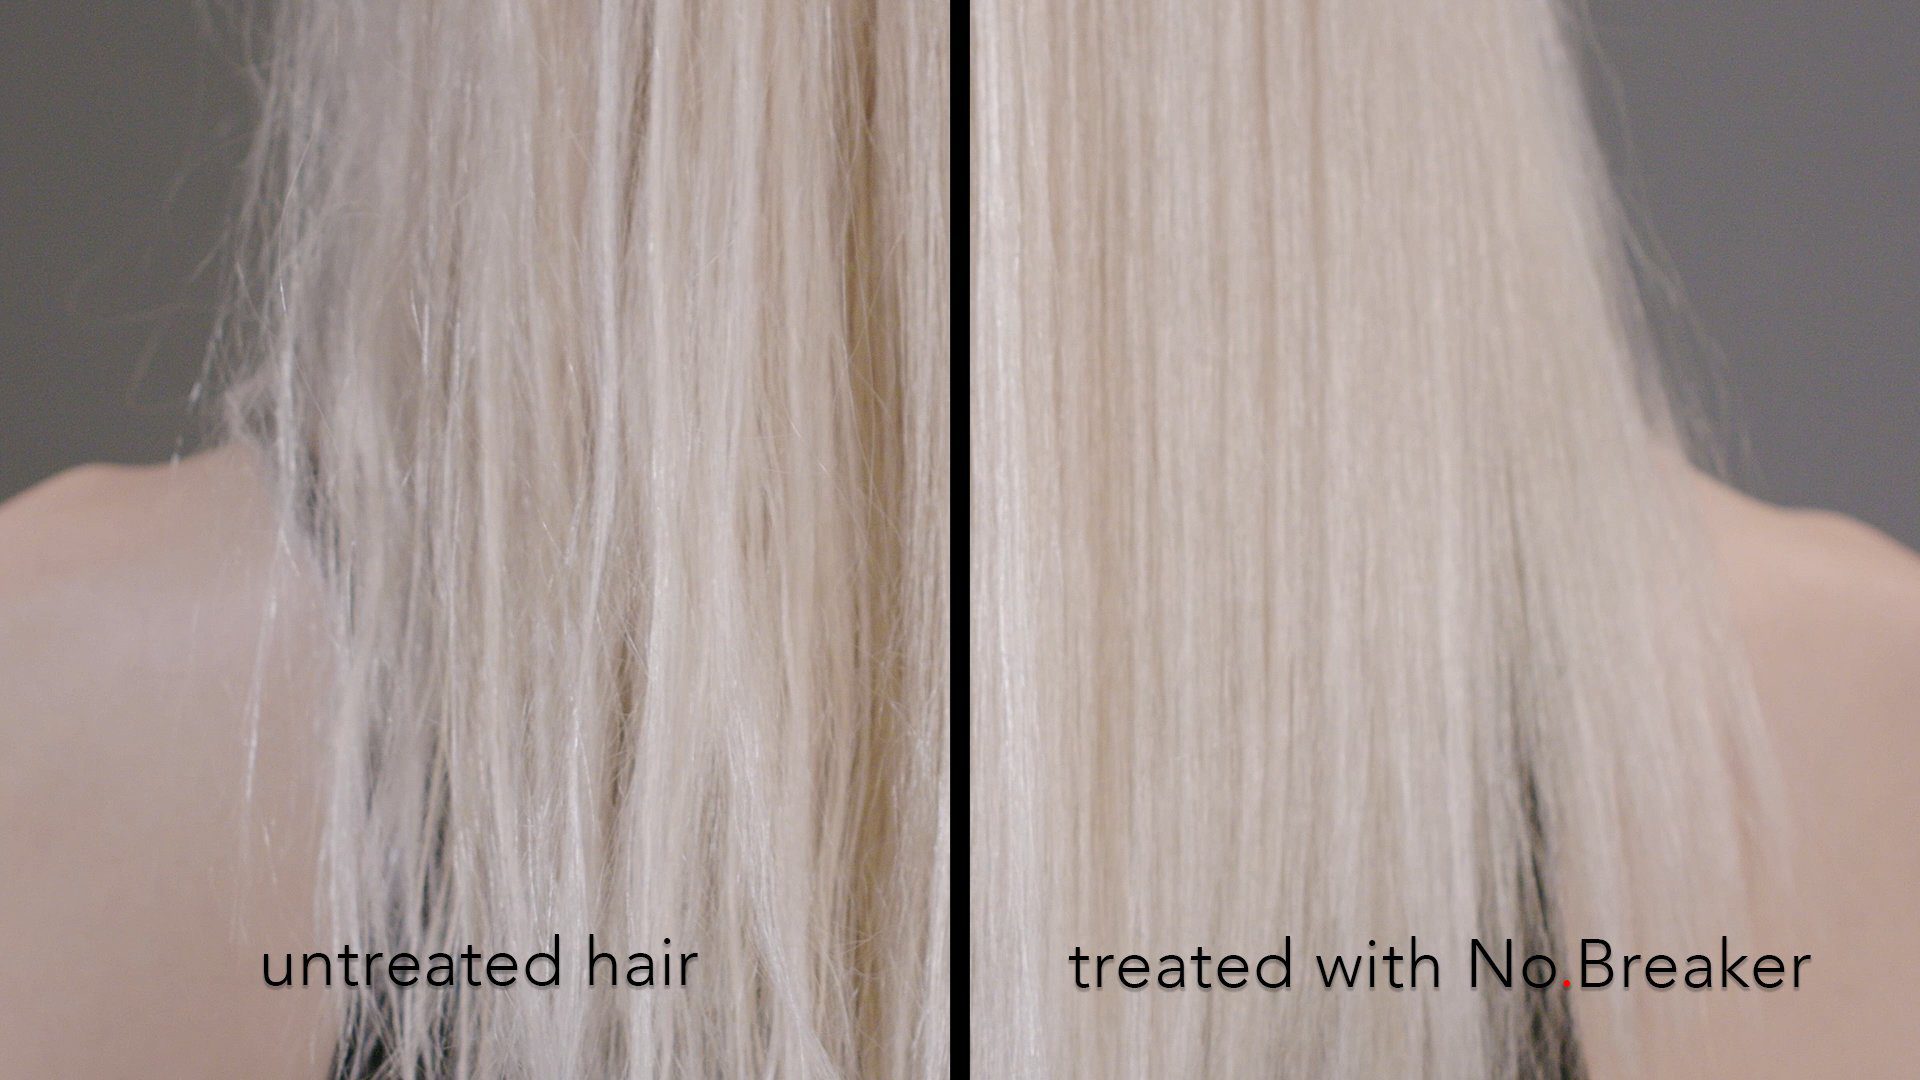 Transform Damaged Hair with Sebastian Professional's No. Breaker - The Tease